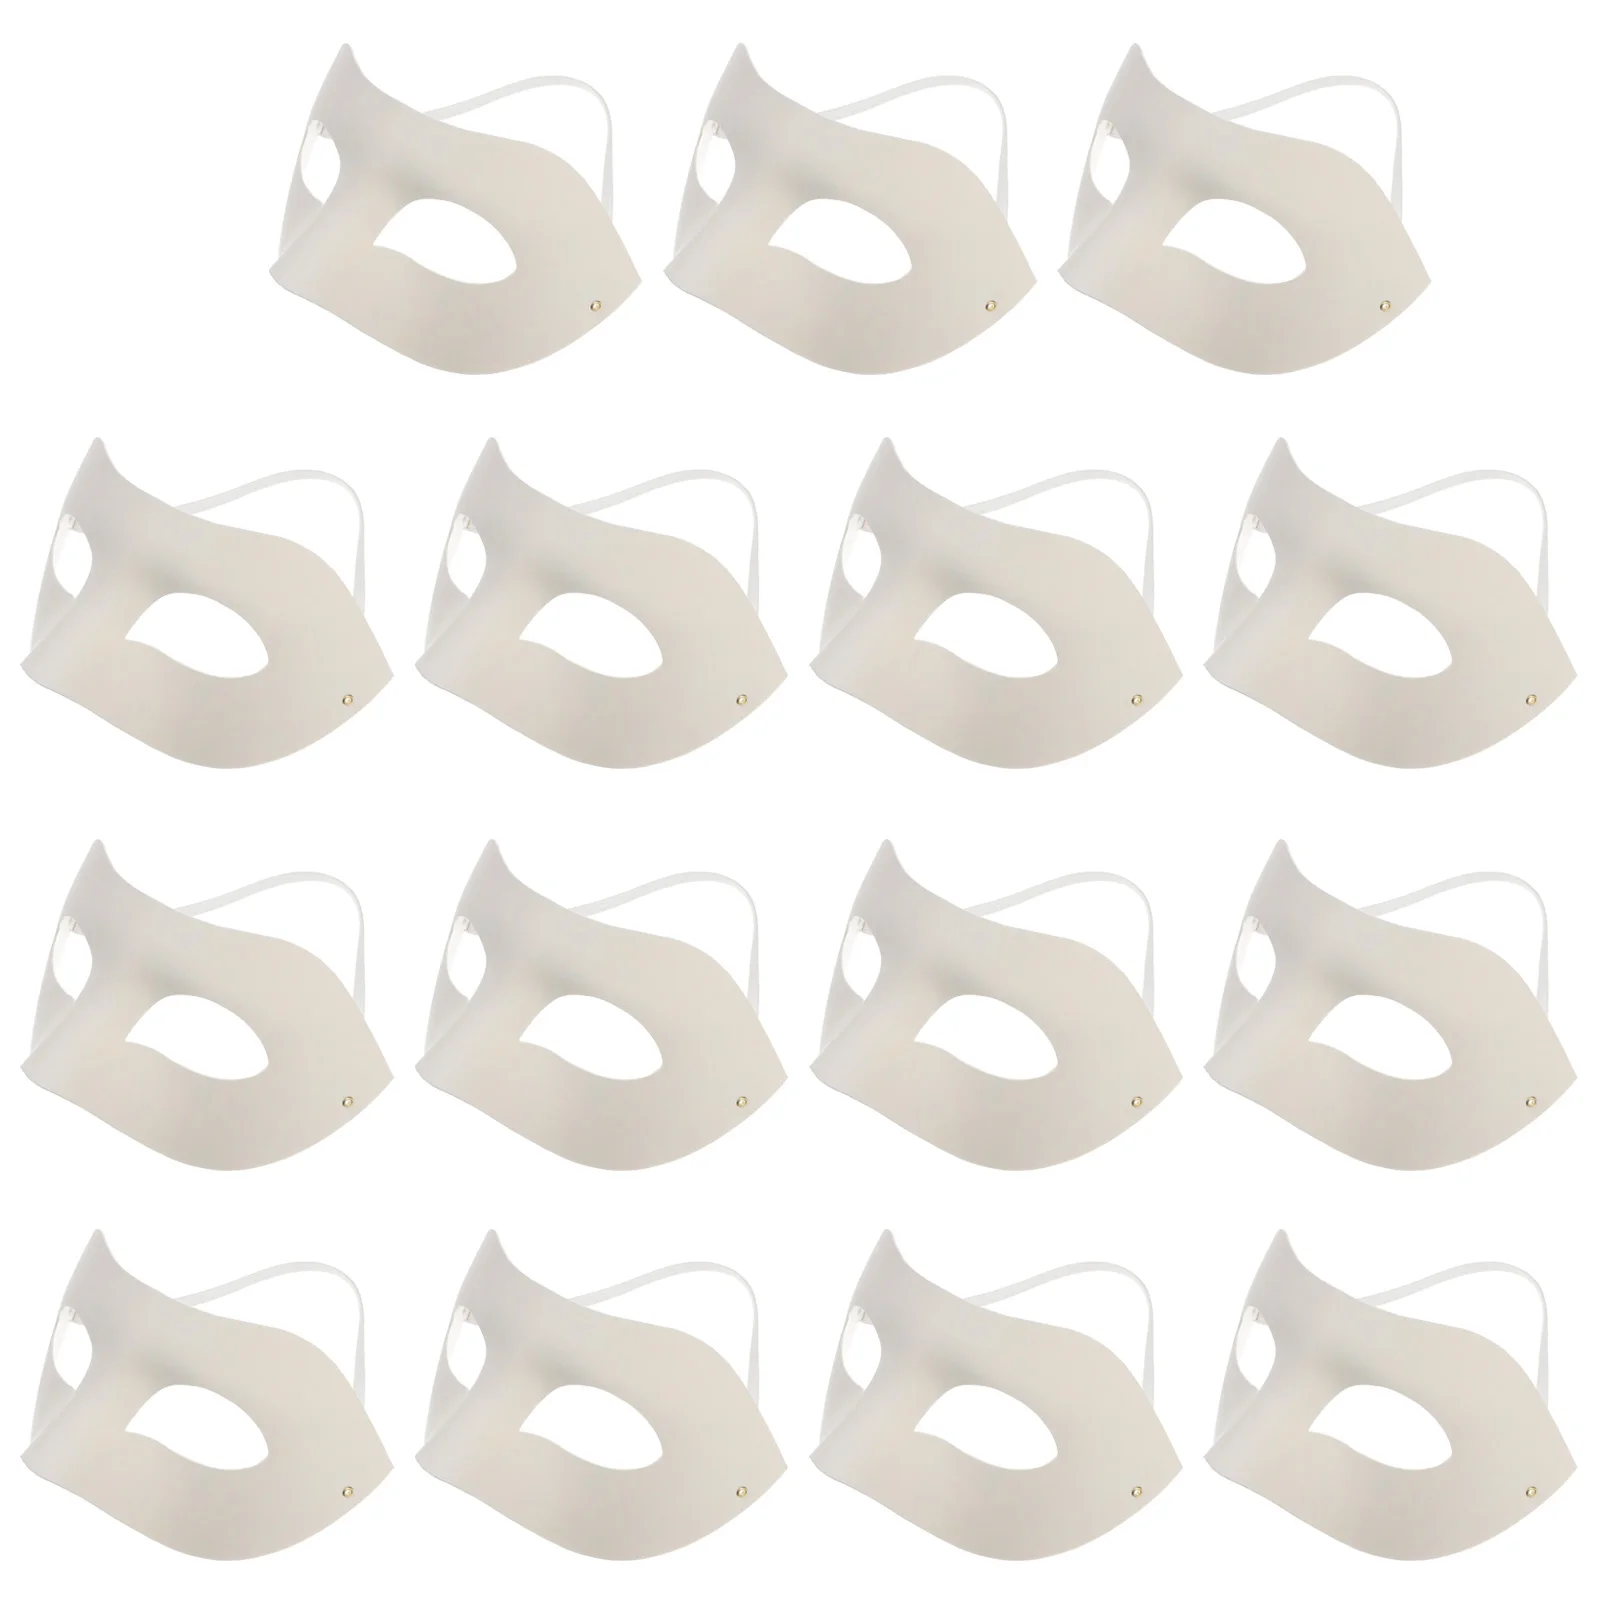 

15 Pcs DIY Pulp Mask Craft Blanks Masquerade White Cosplay Costume Mascarade Women Halloween Costumes Kids Face